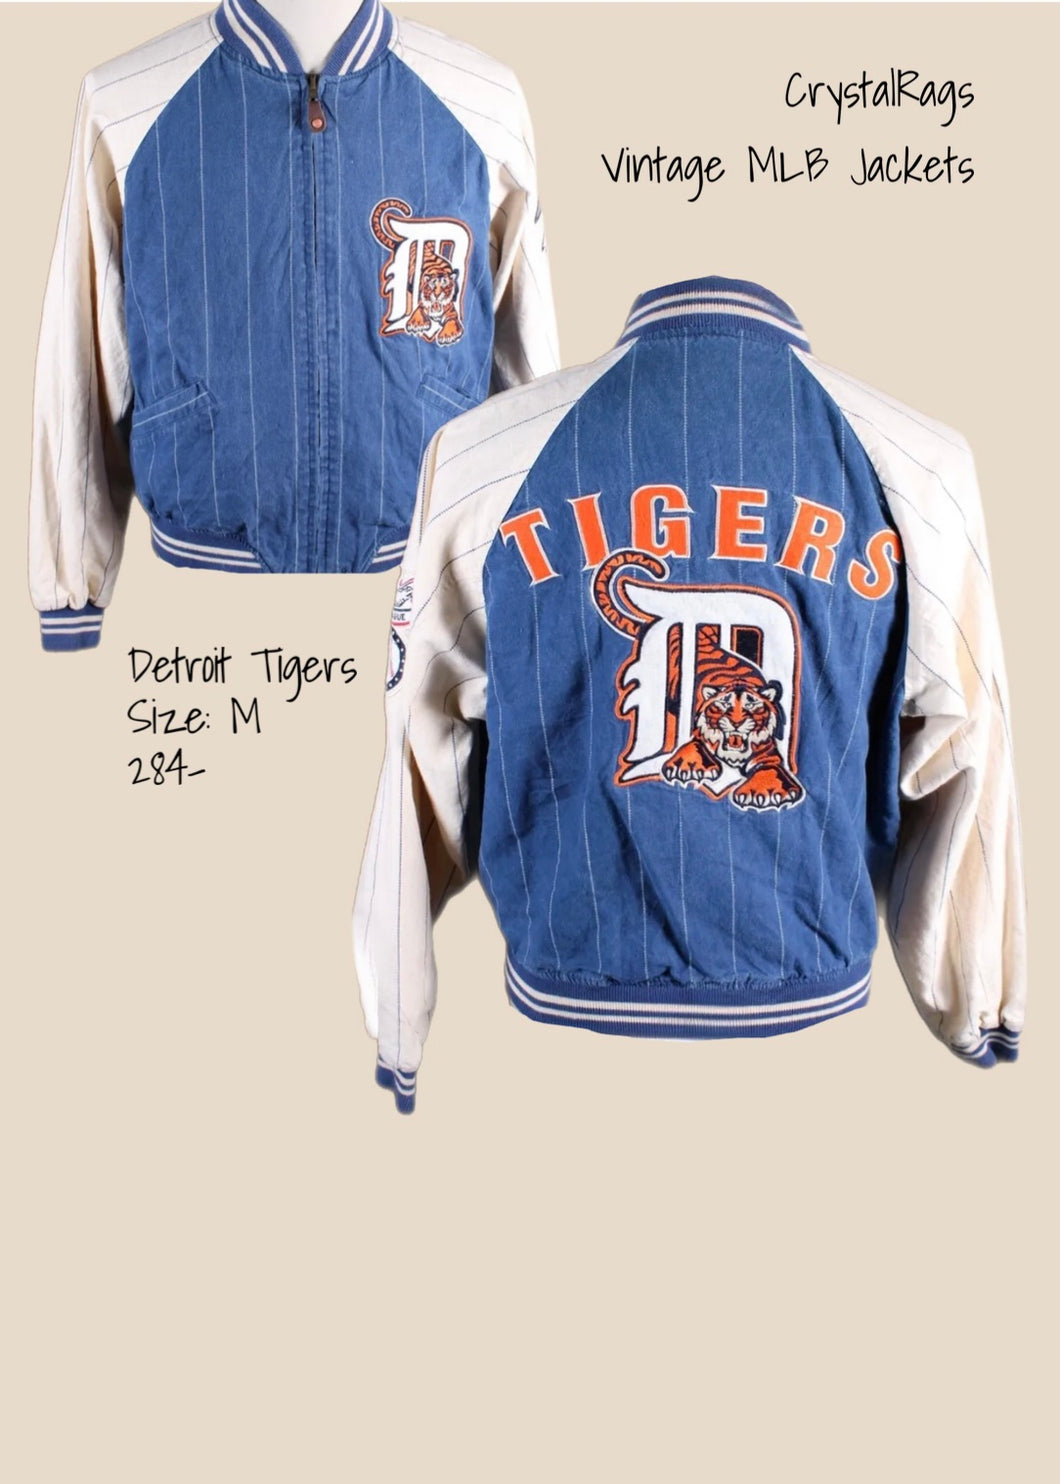 Detroit Tigers, MLB One of a KIND Vintage Jacket with Crystal Star Design